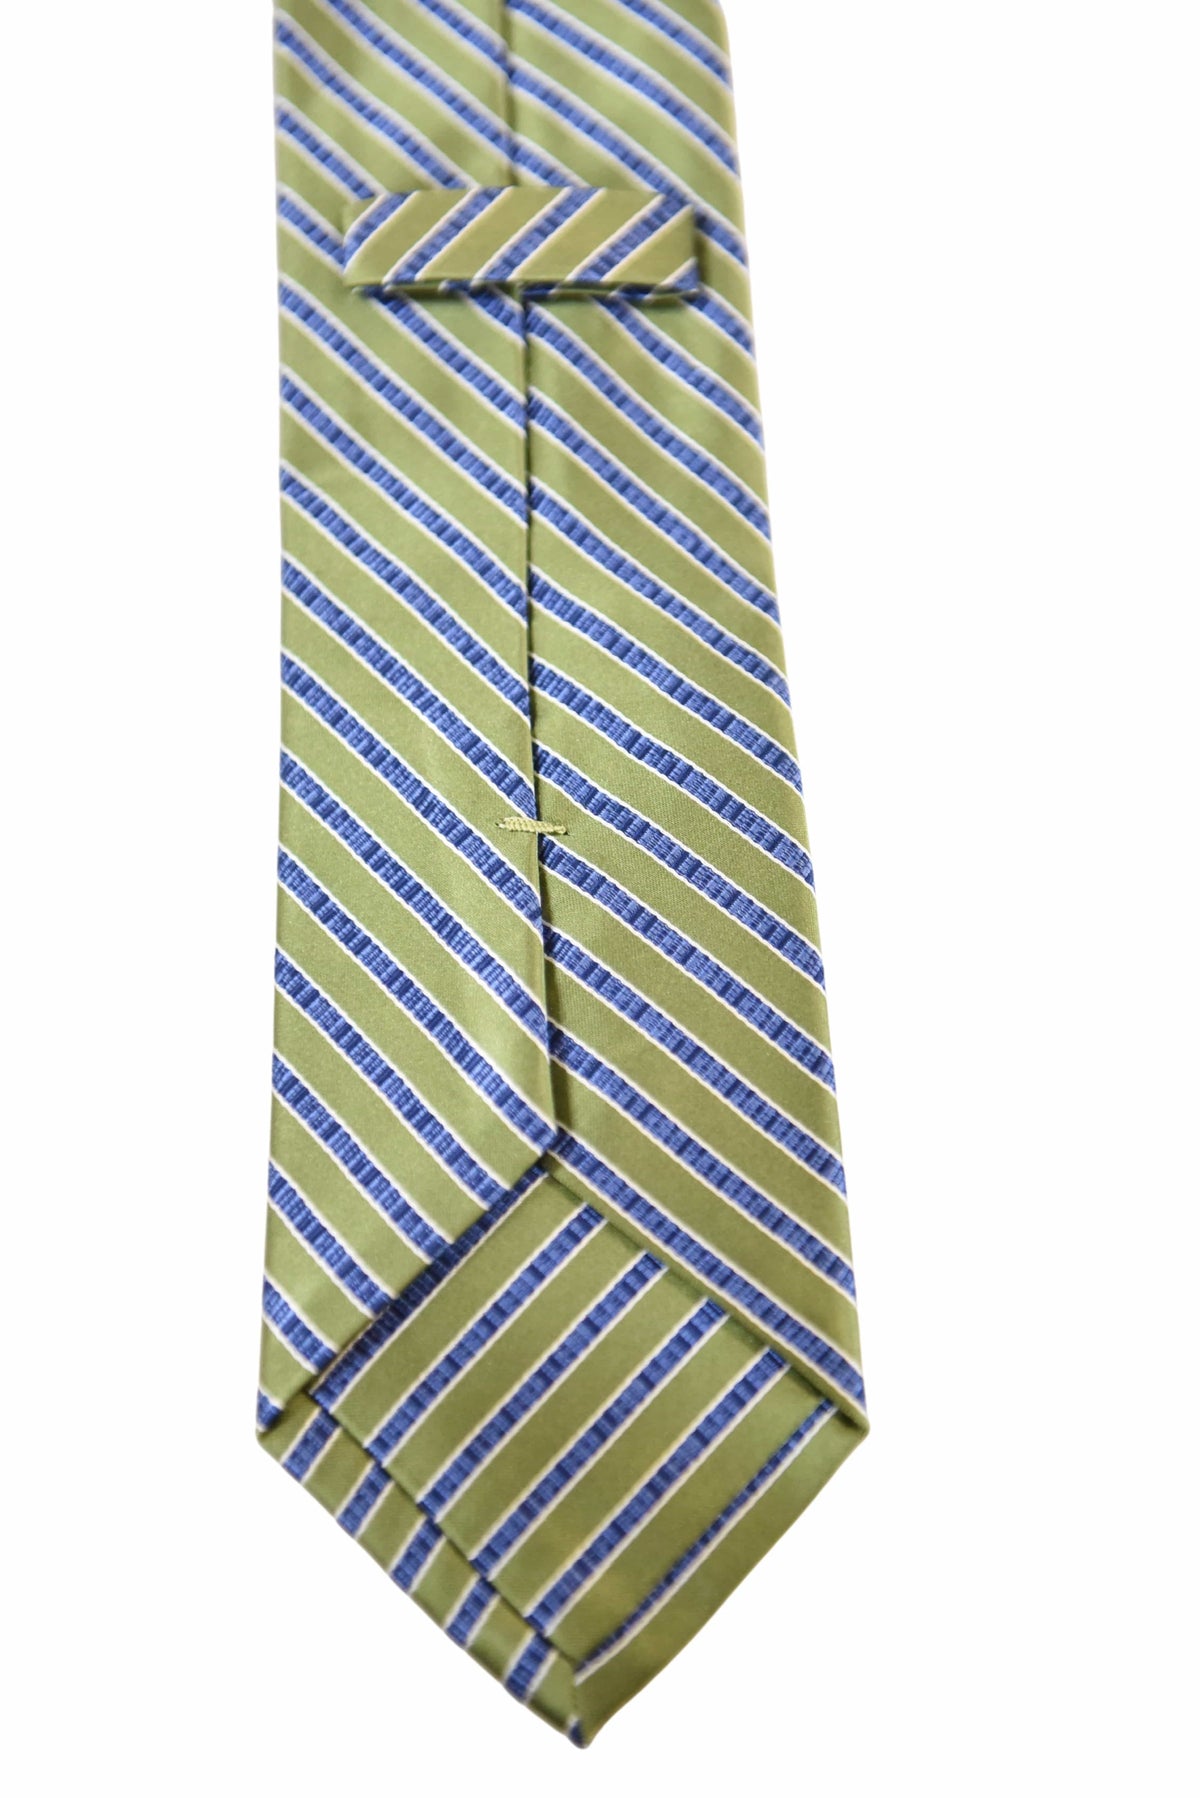 The Suit Depot Green Stripe Arthur Black Premium Silk Tie